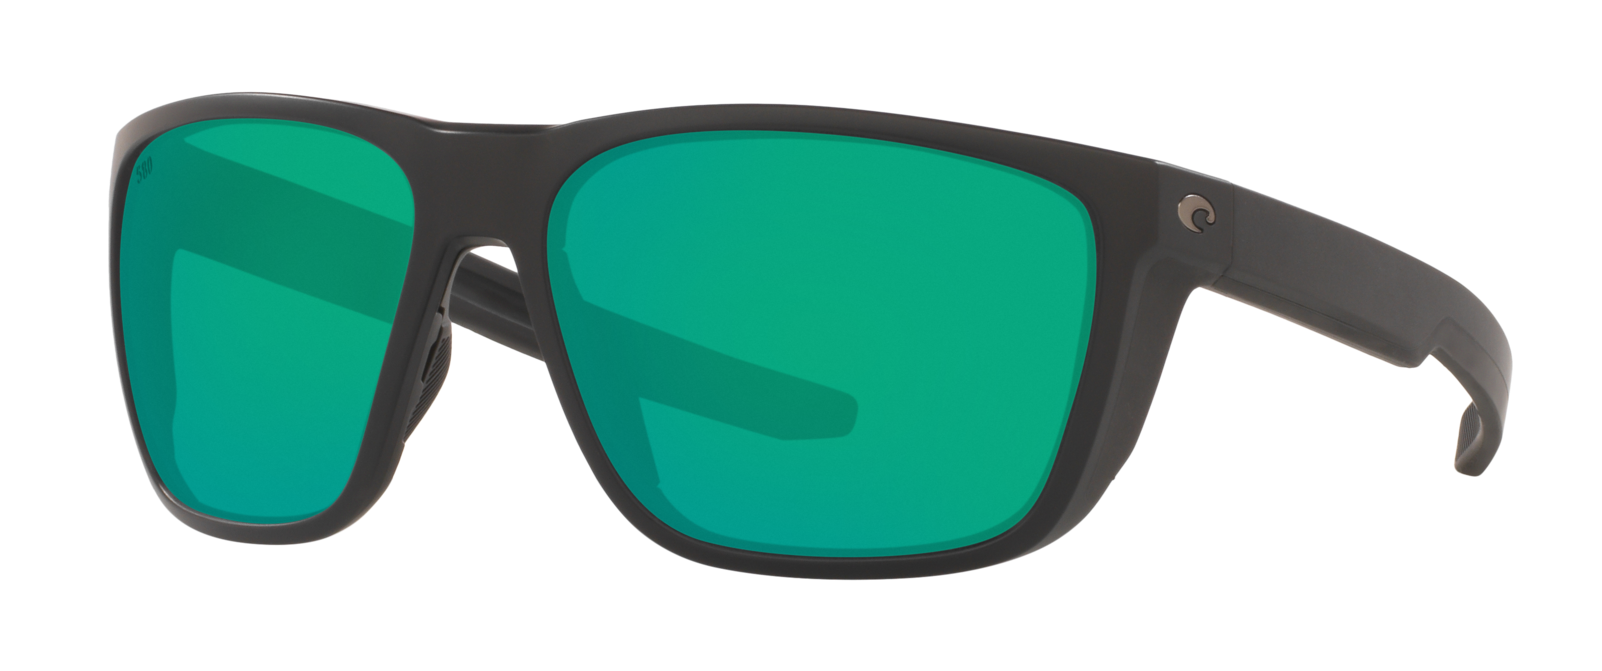 costa ferg fishing sunglasses in matte black with green mirror glass polarized lenses